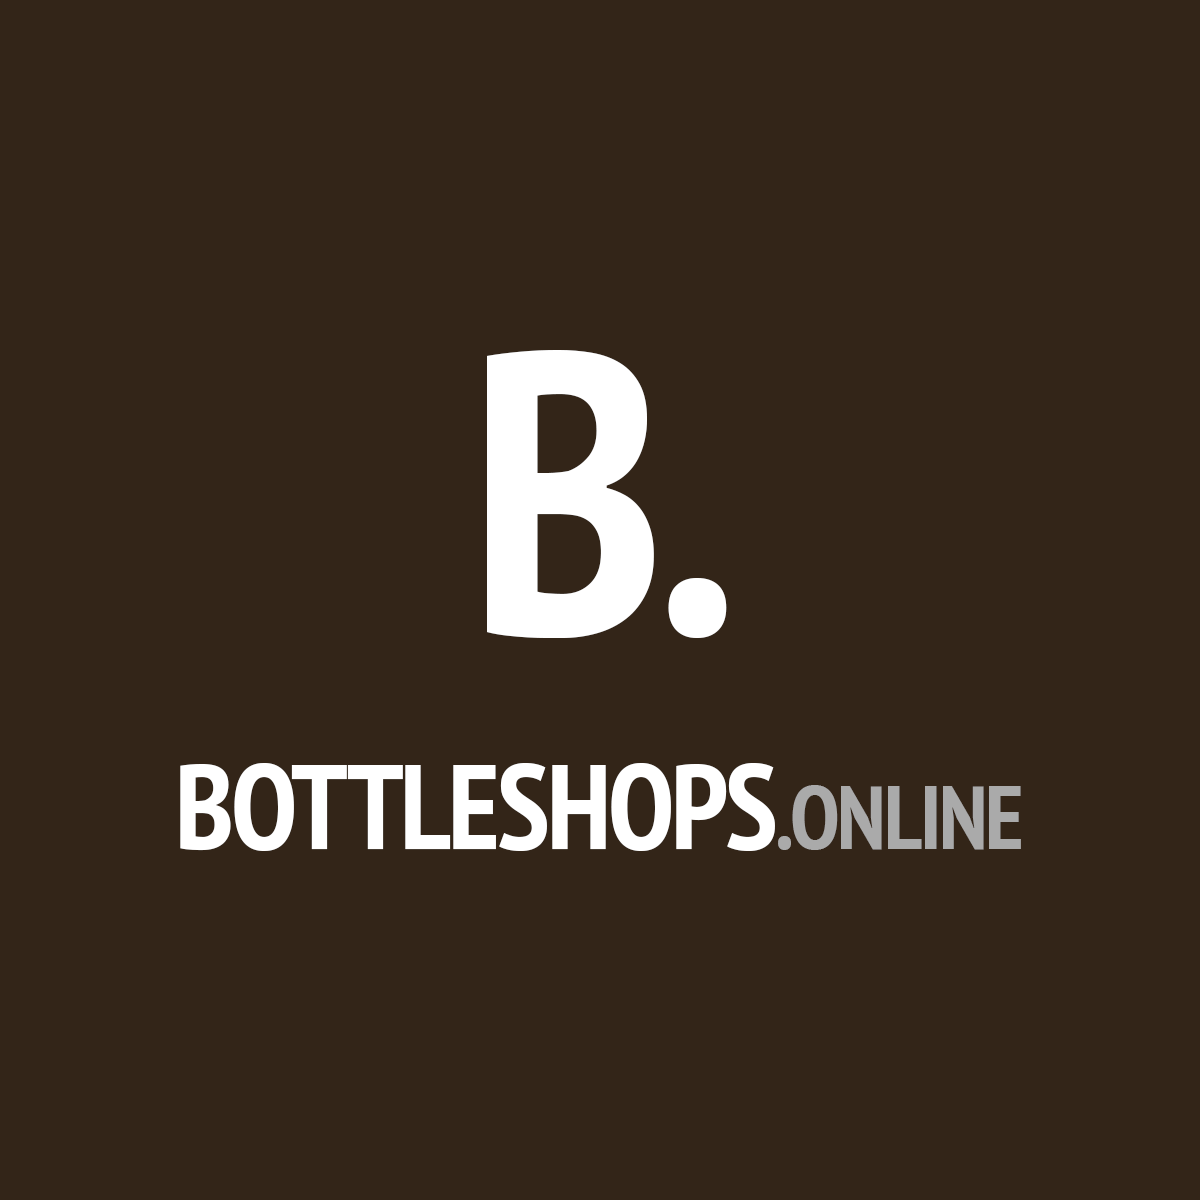 Online Bottleshop